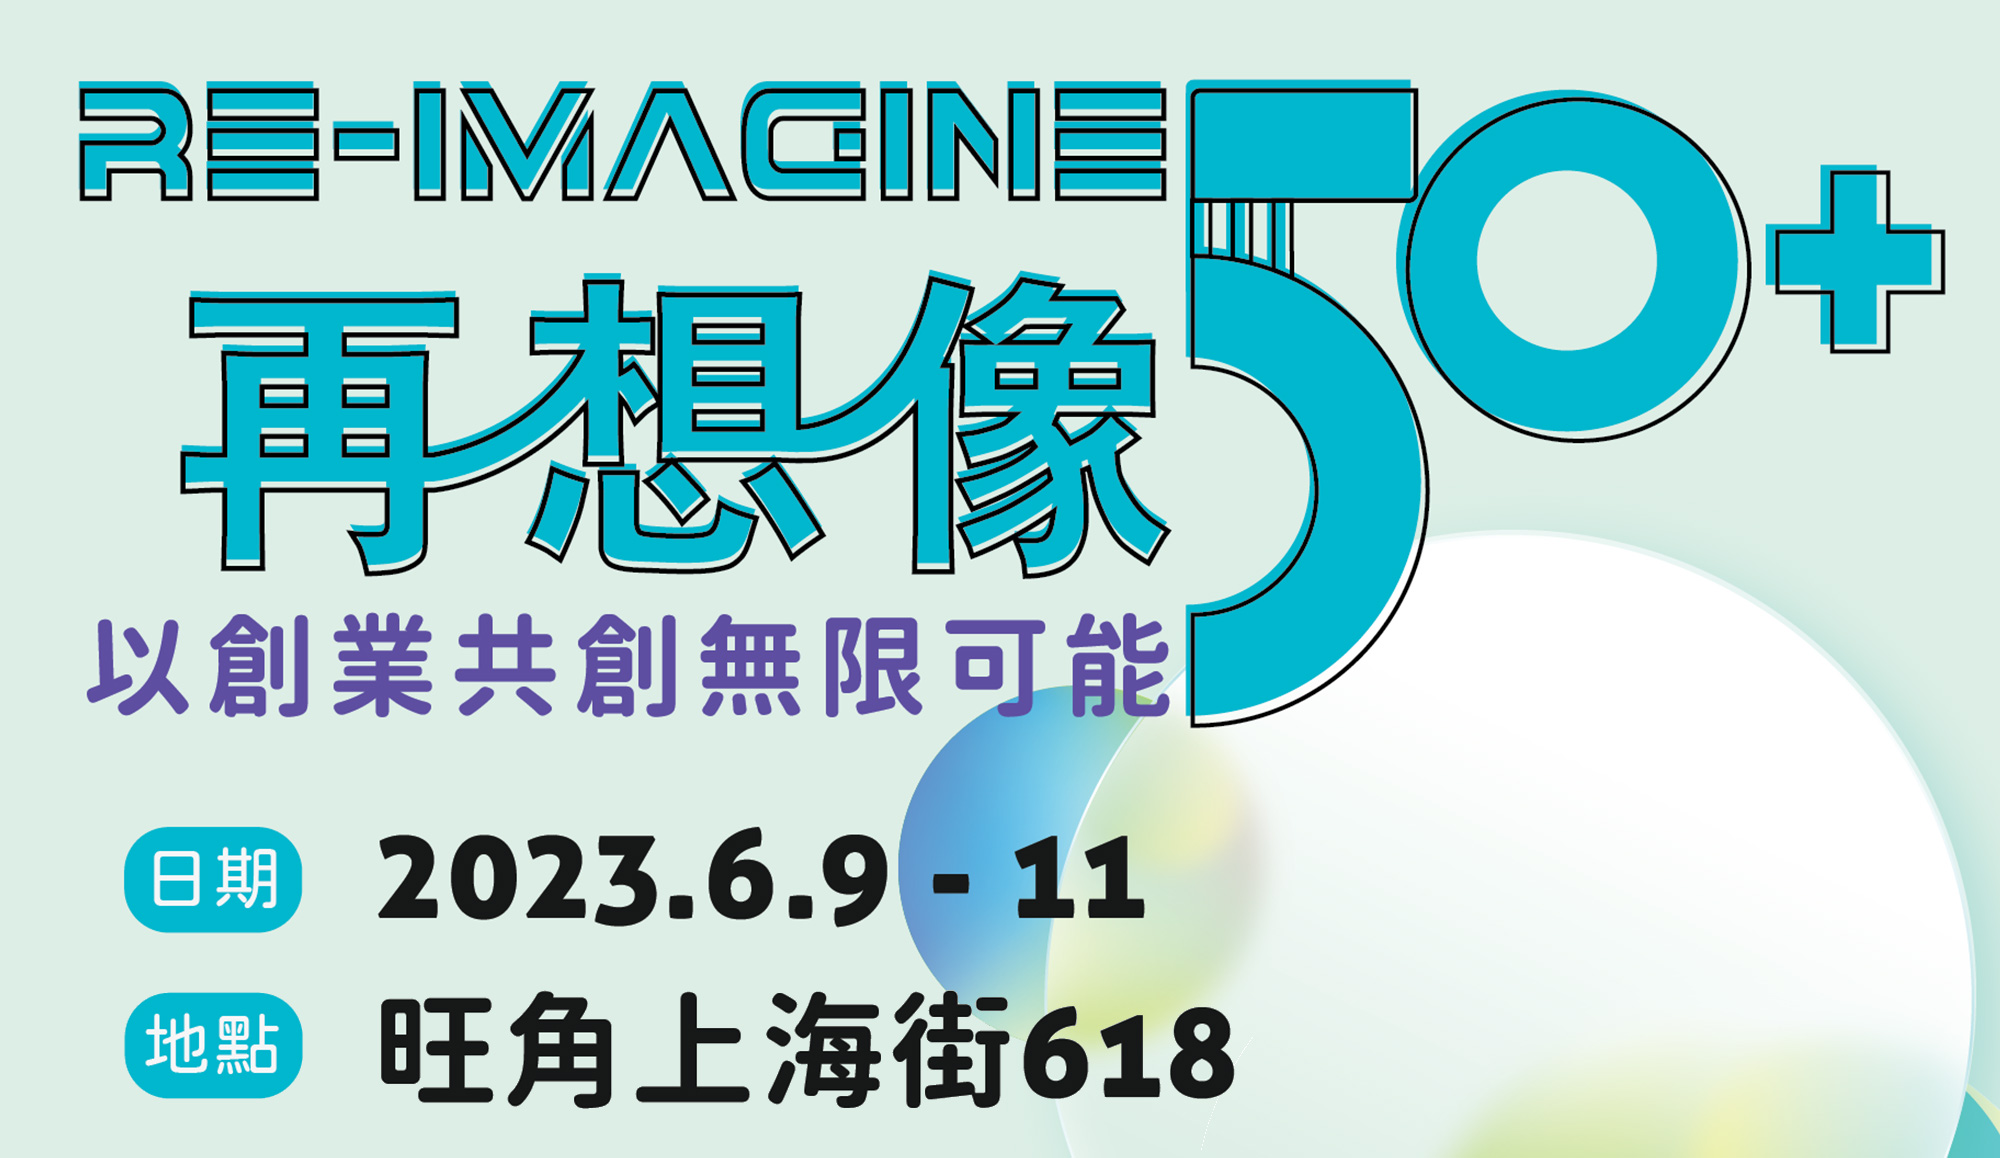 Re-Imagine 50+ Exhibition Showcase